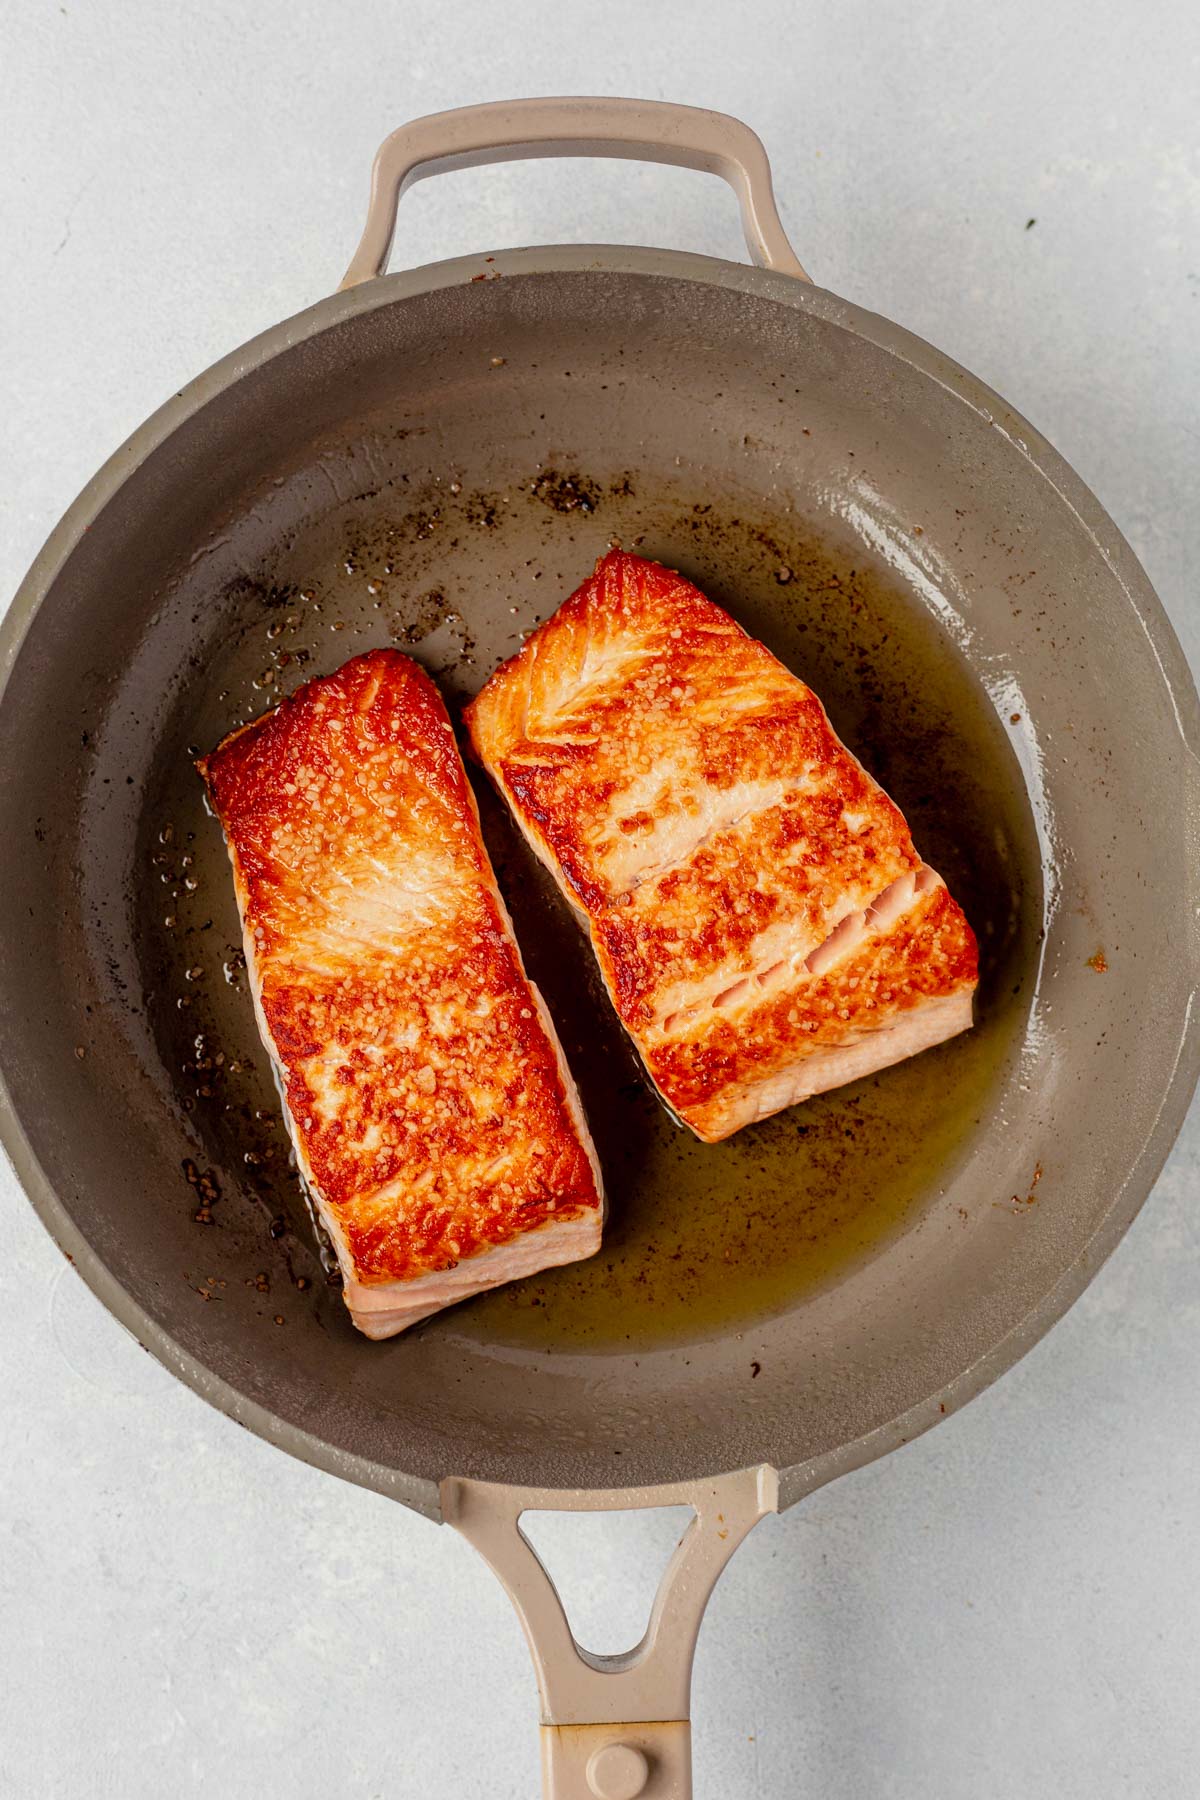 seared salmon filets in a skillet